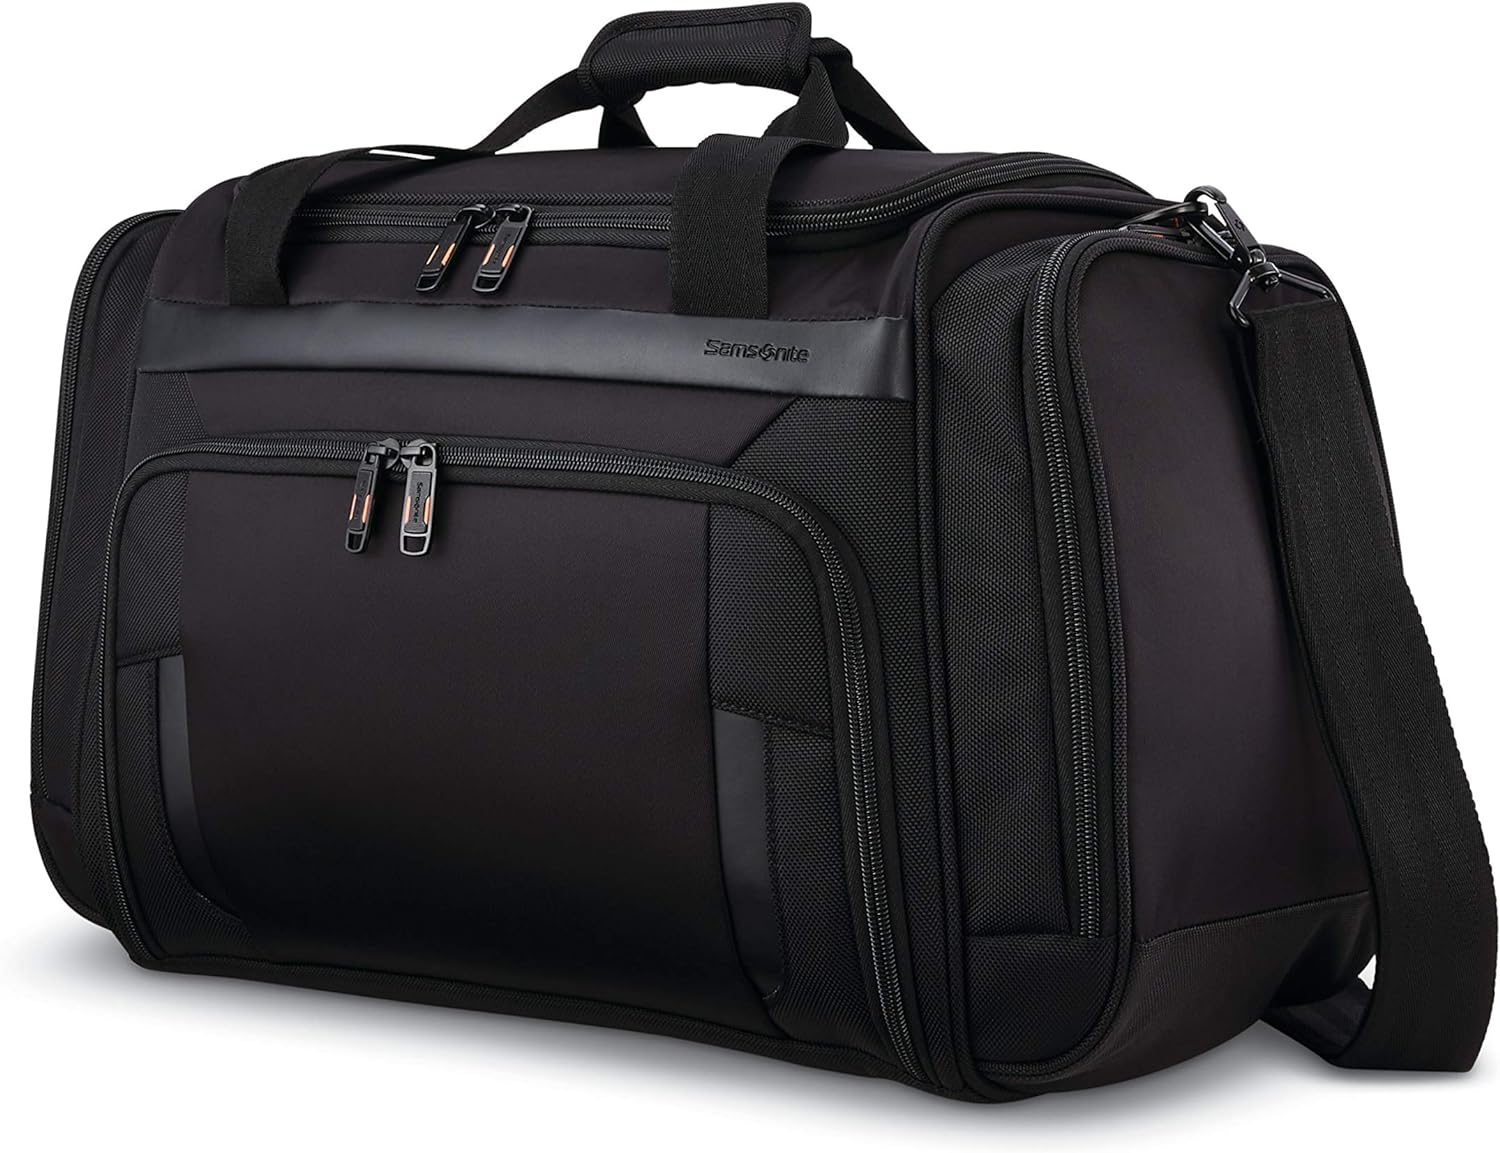 10. Samsonite Pro Duffle Non-Wheeled Travel Bag 